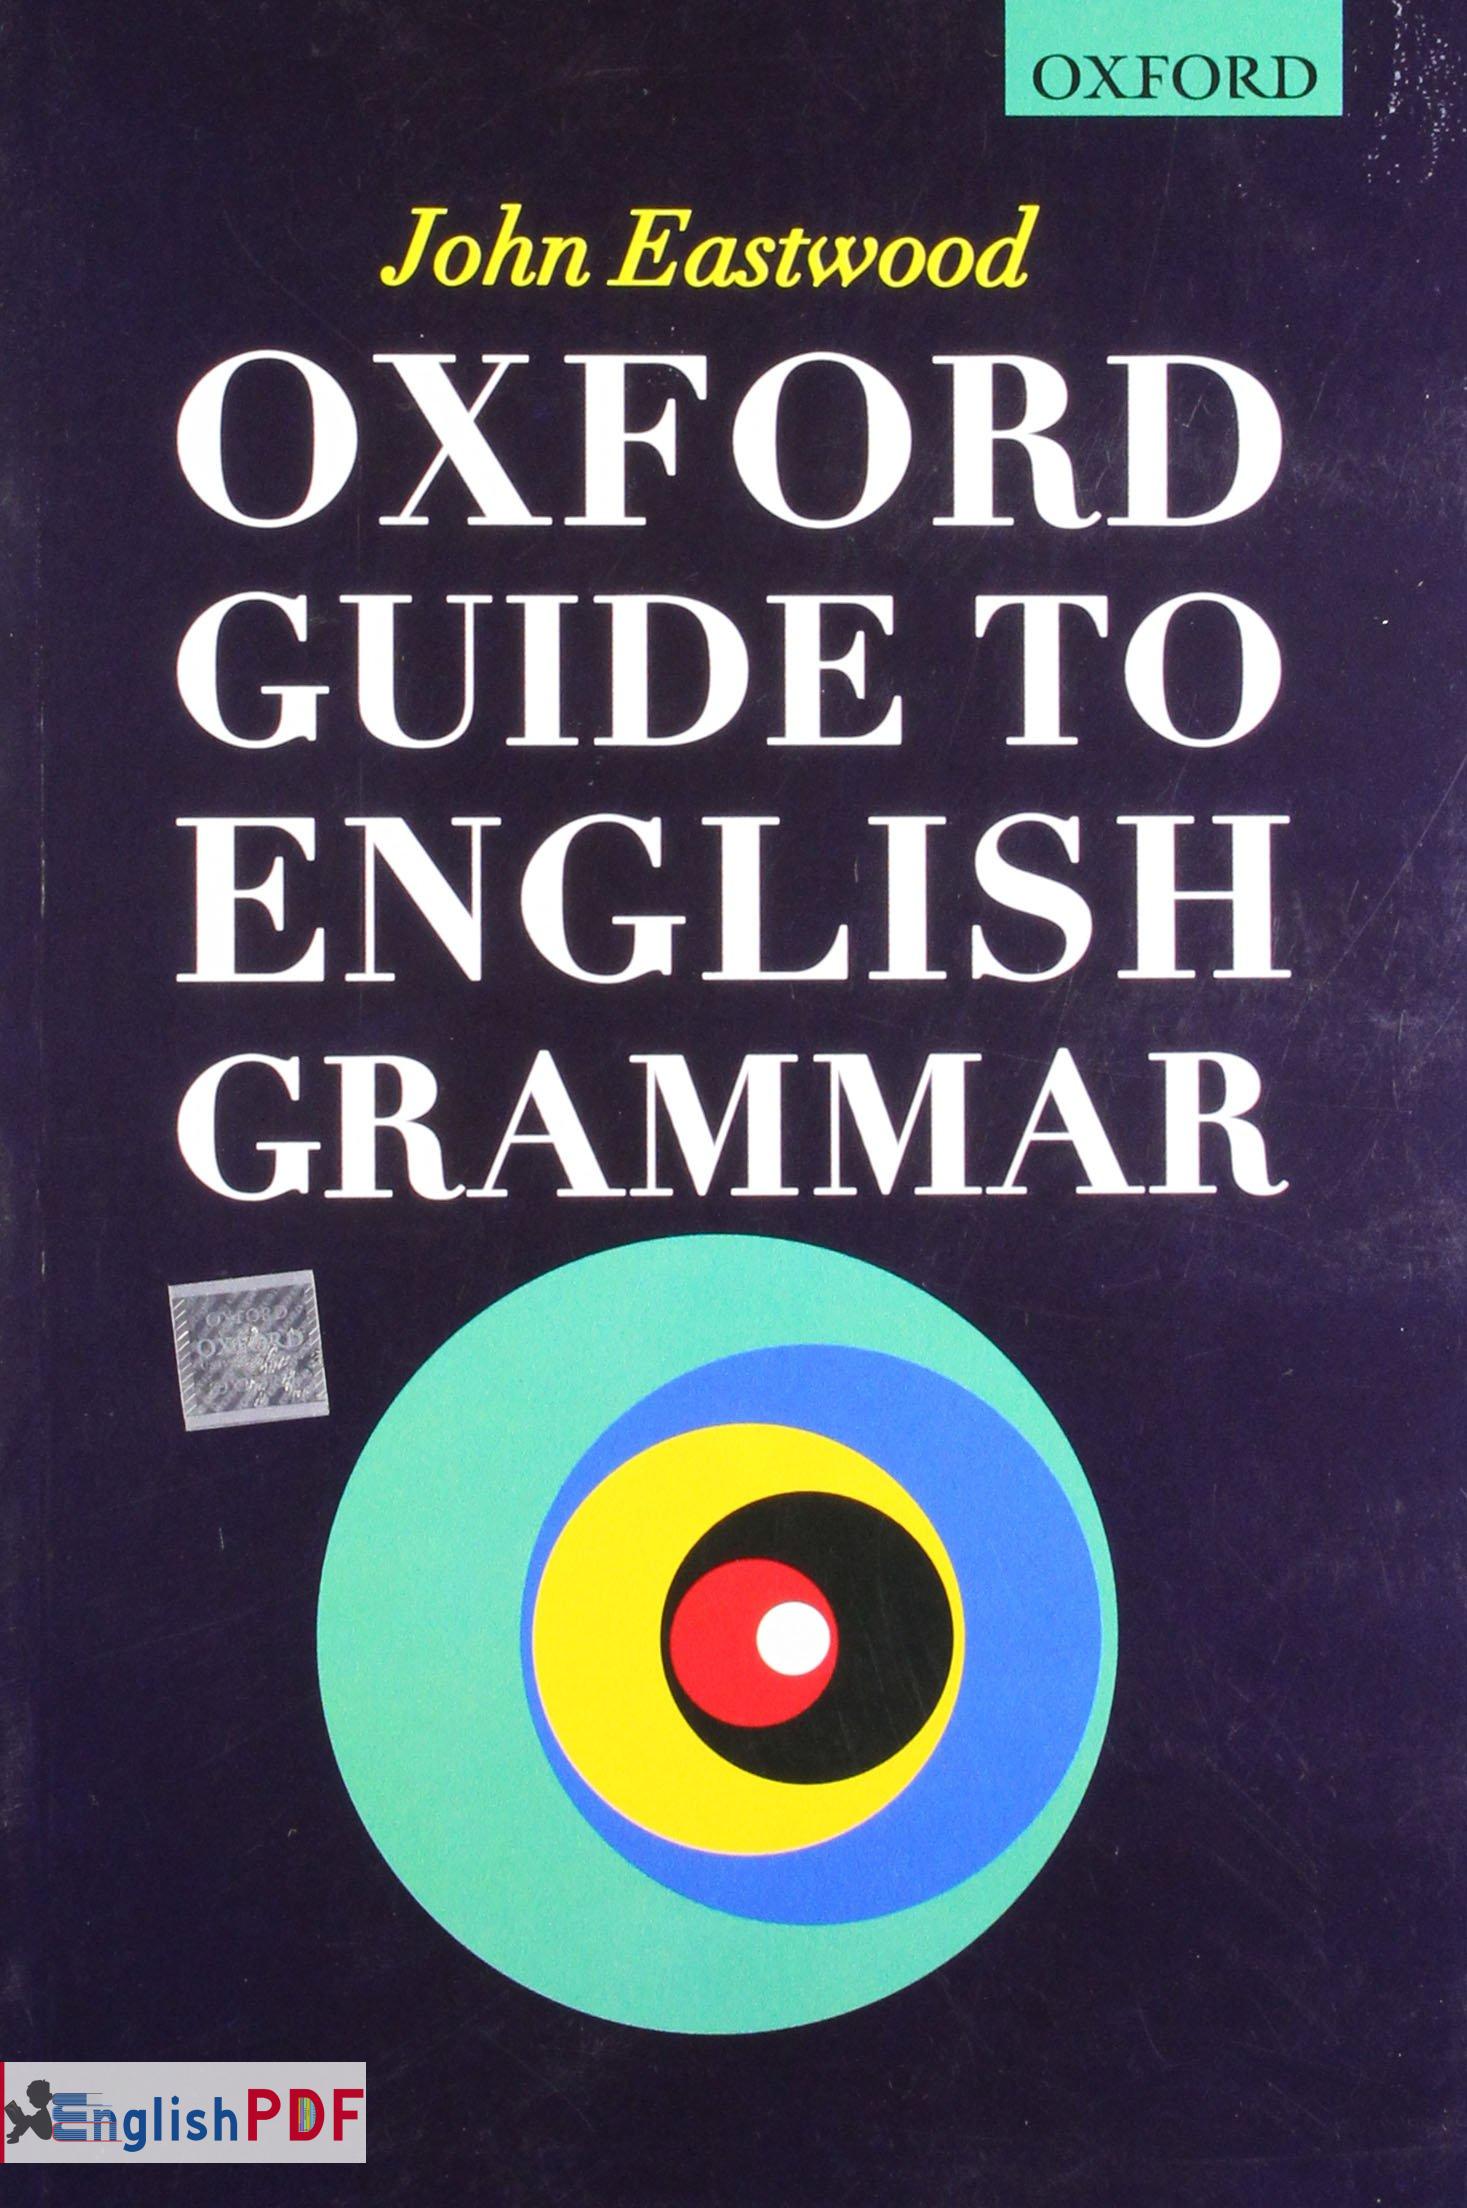 Oxford guide to English grammar PDF By EnglishPDF